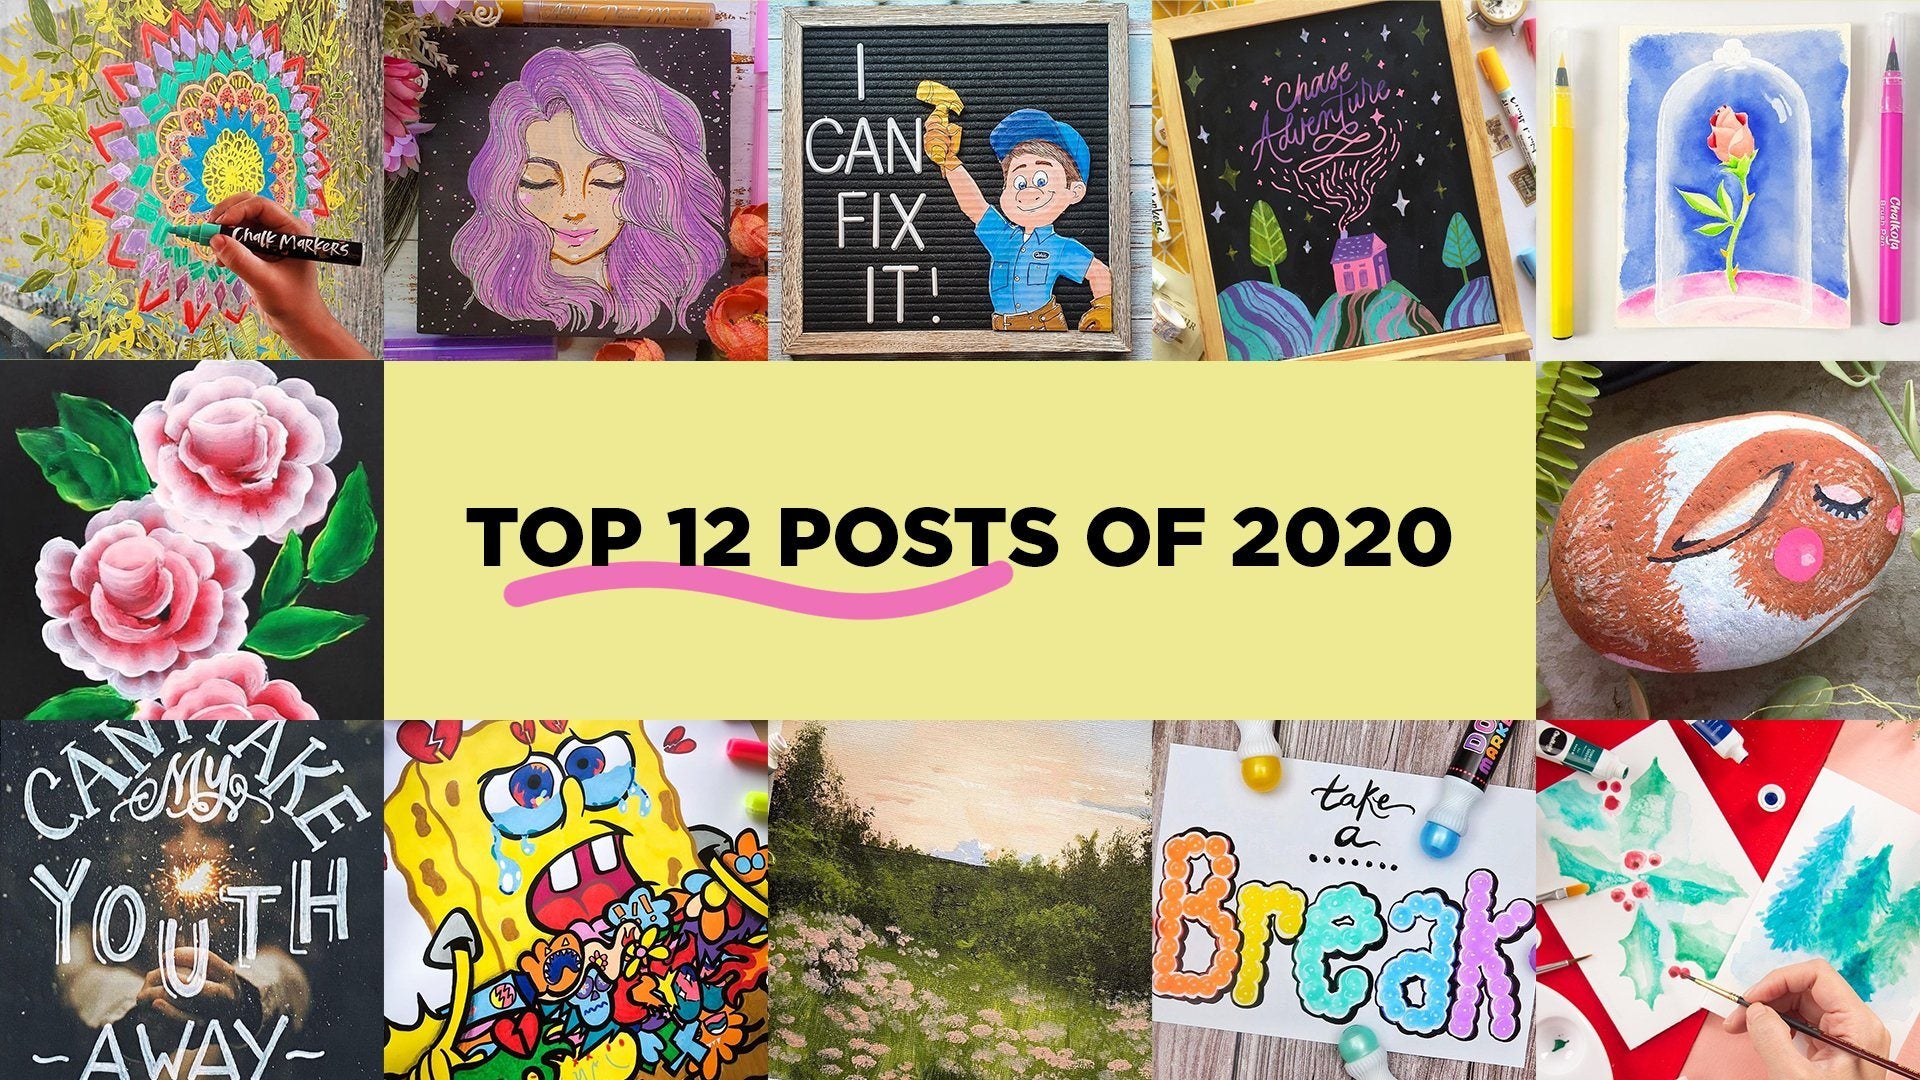 Chalkola’s Top 12 Posts of 2020